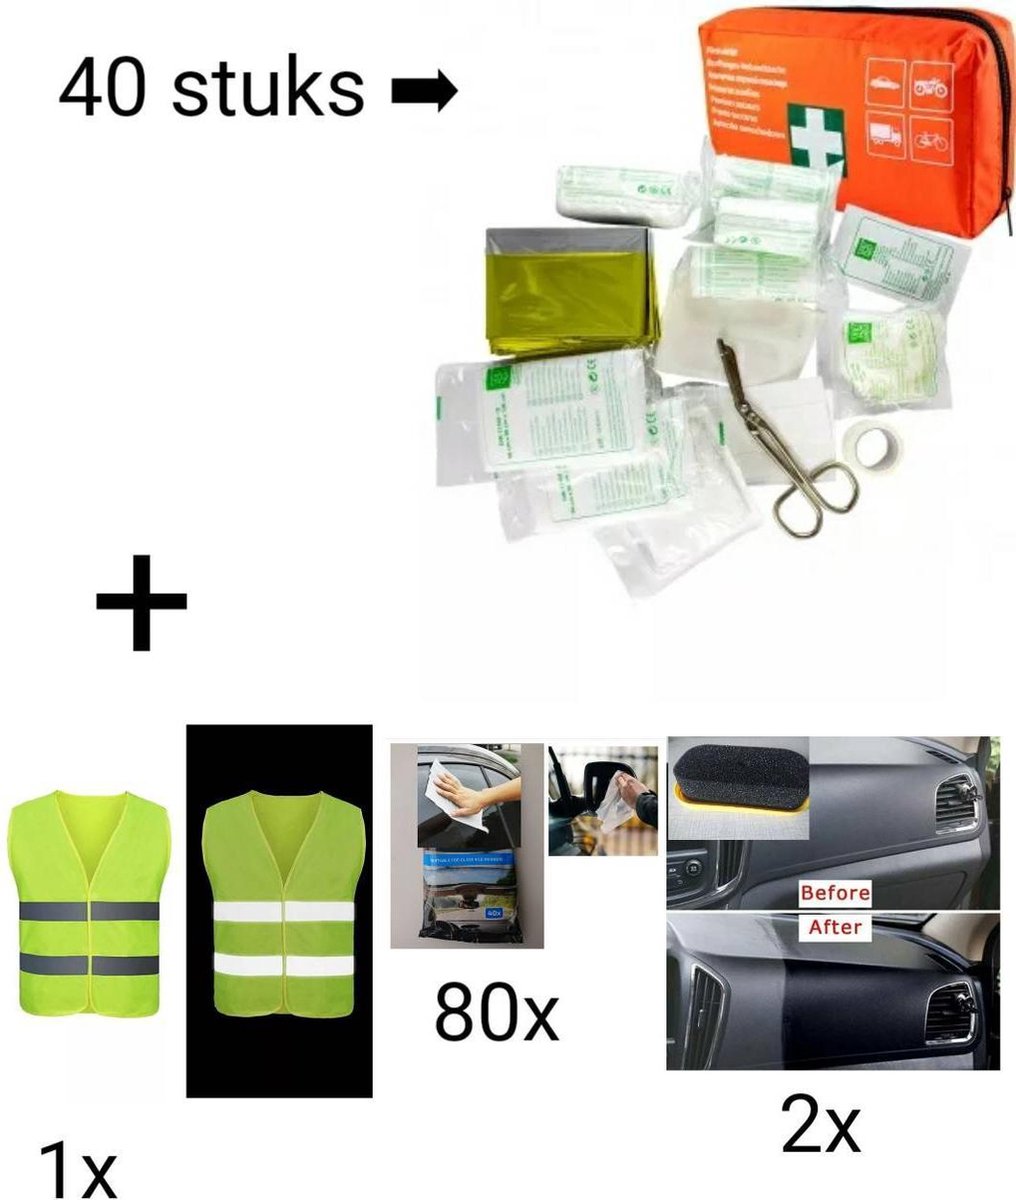 First AID Kit - veiligheid vest - Dashboard reiniger - auto doekjes - auto spiegel - natte doekjes - auto spons - dashboard polish - EHBO koffer DIN 13164 - mirror wipes